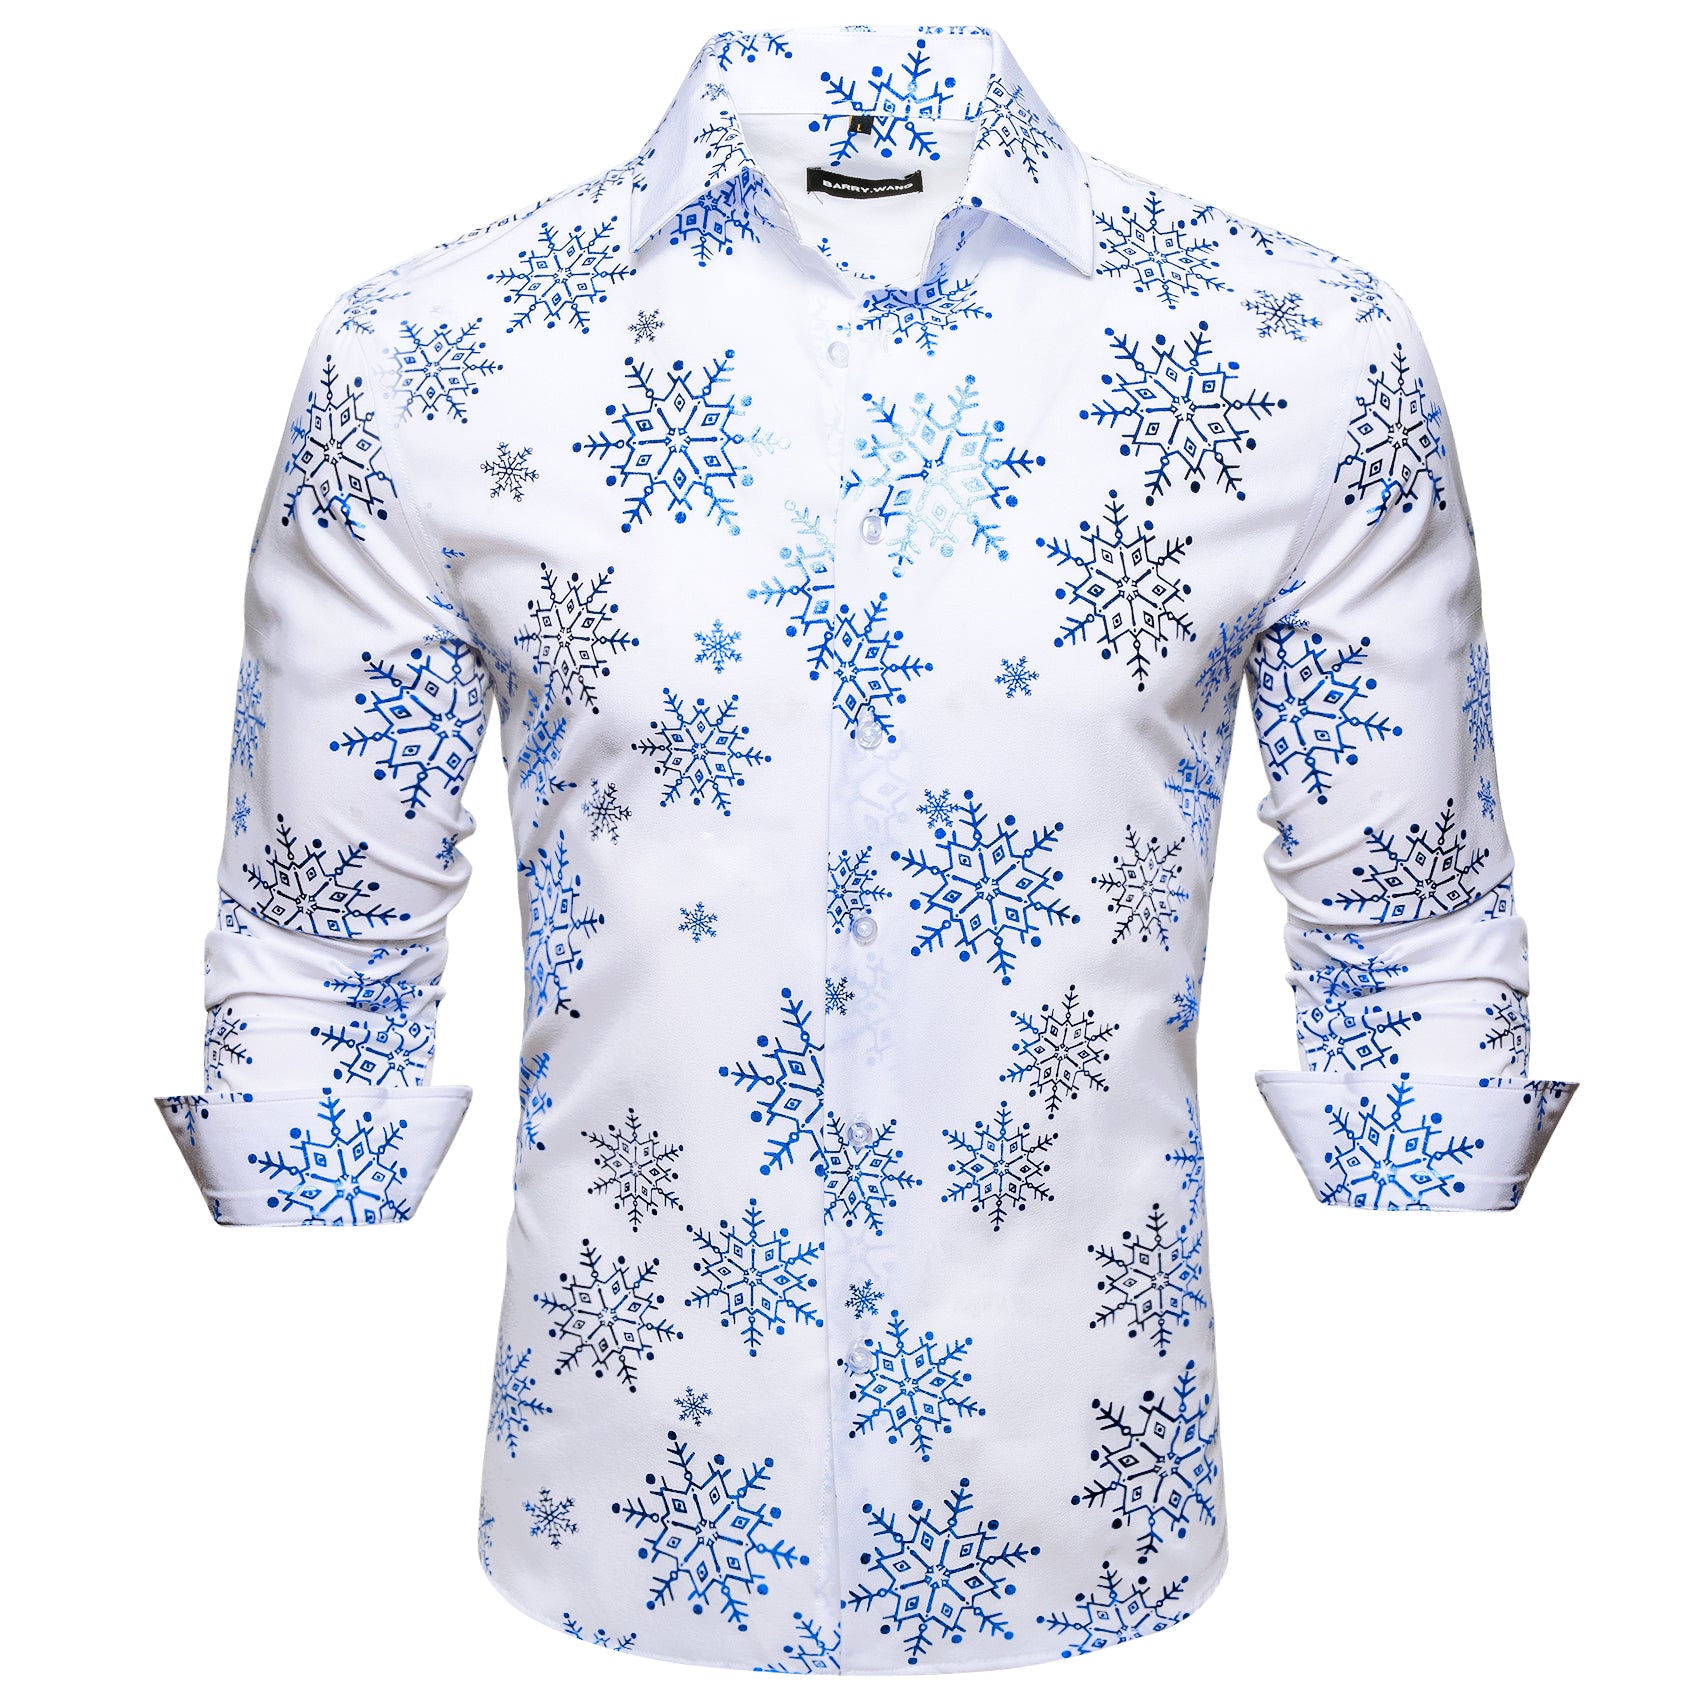 Barry.wang Christmas White Blue Snowflake Floral Silk Shirt